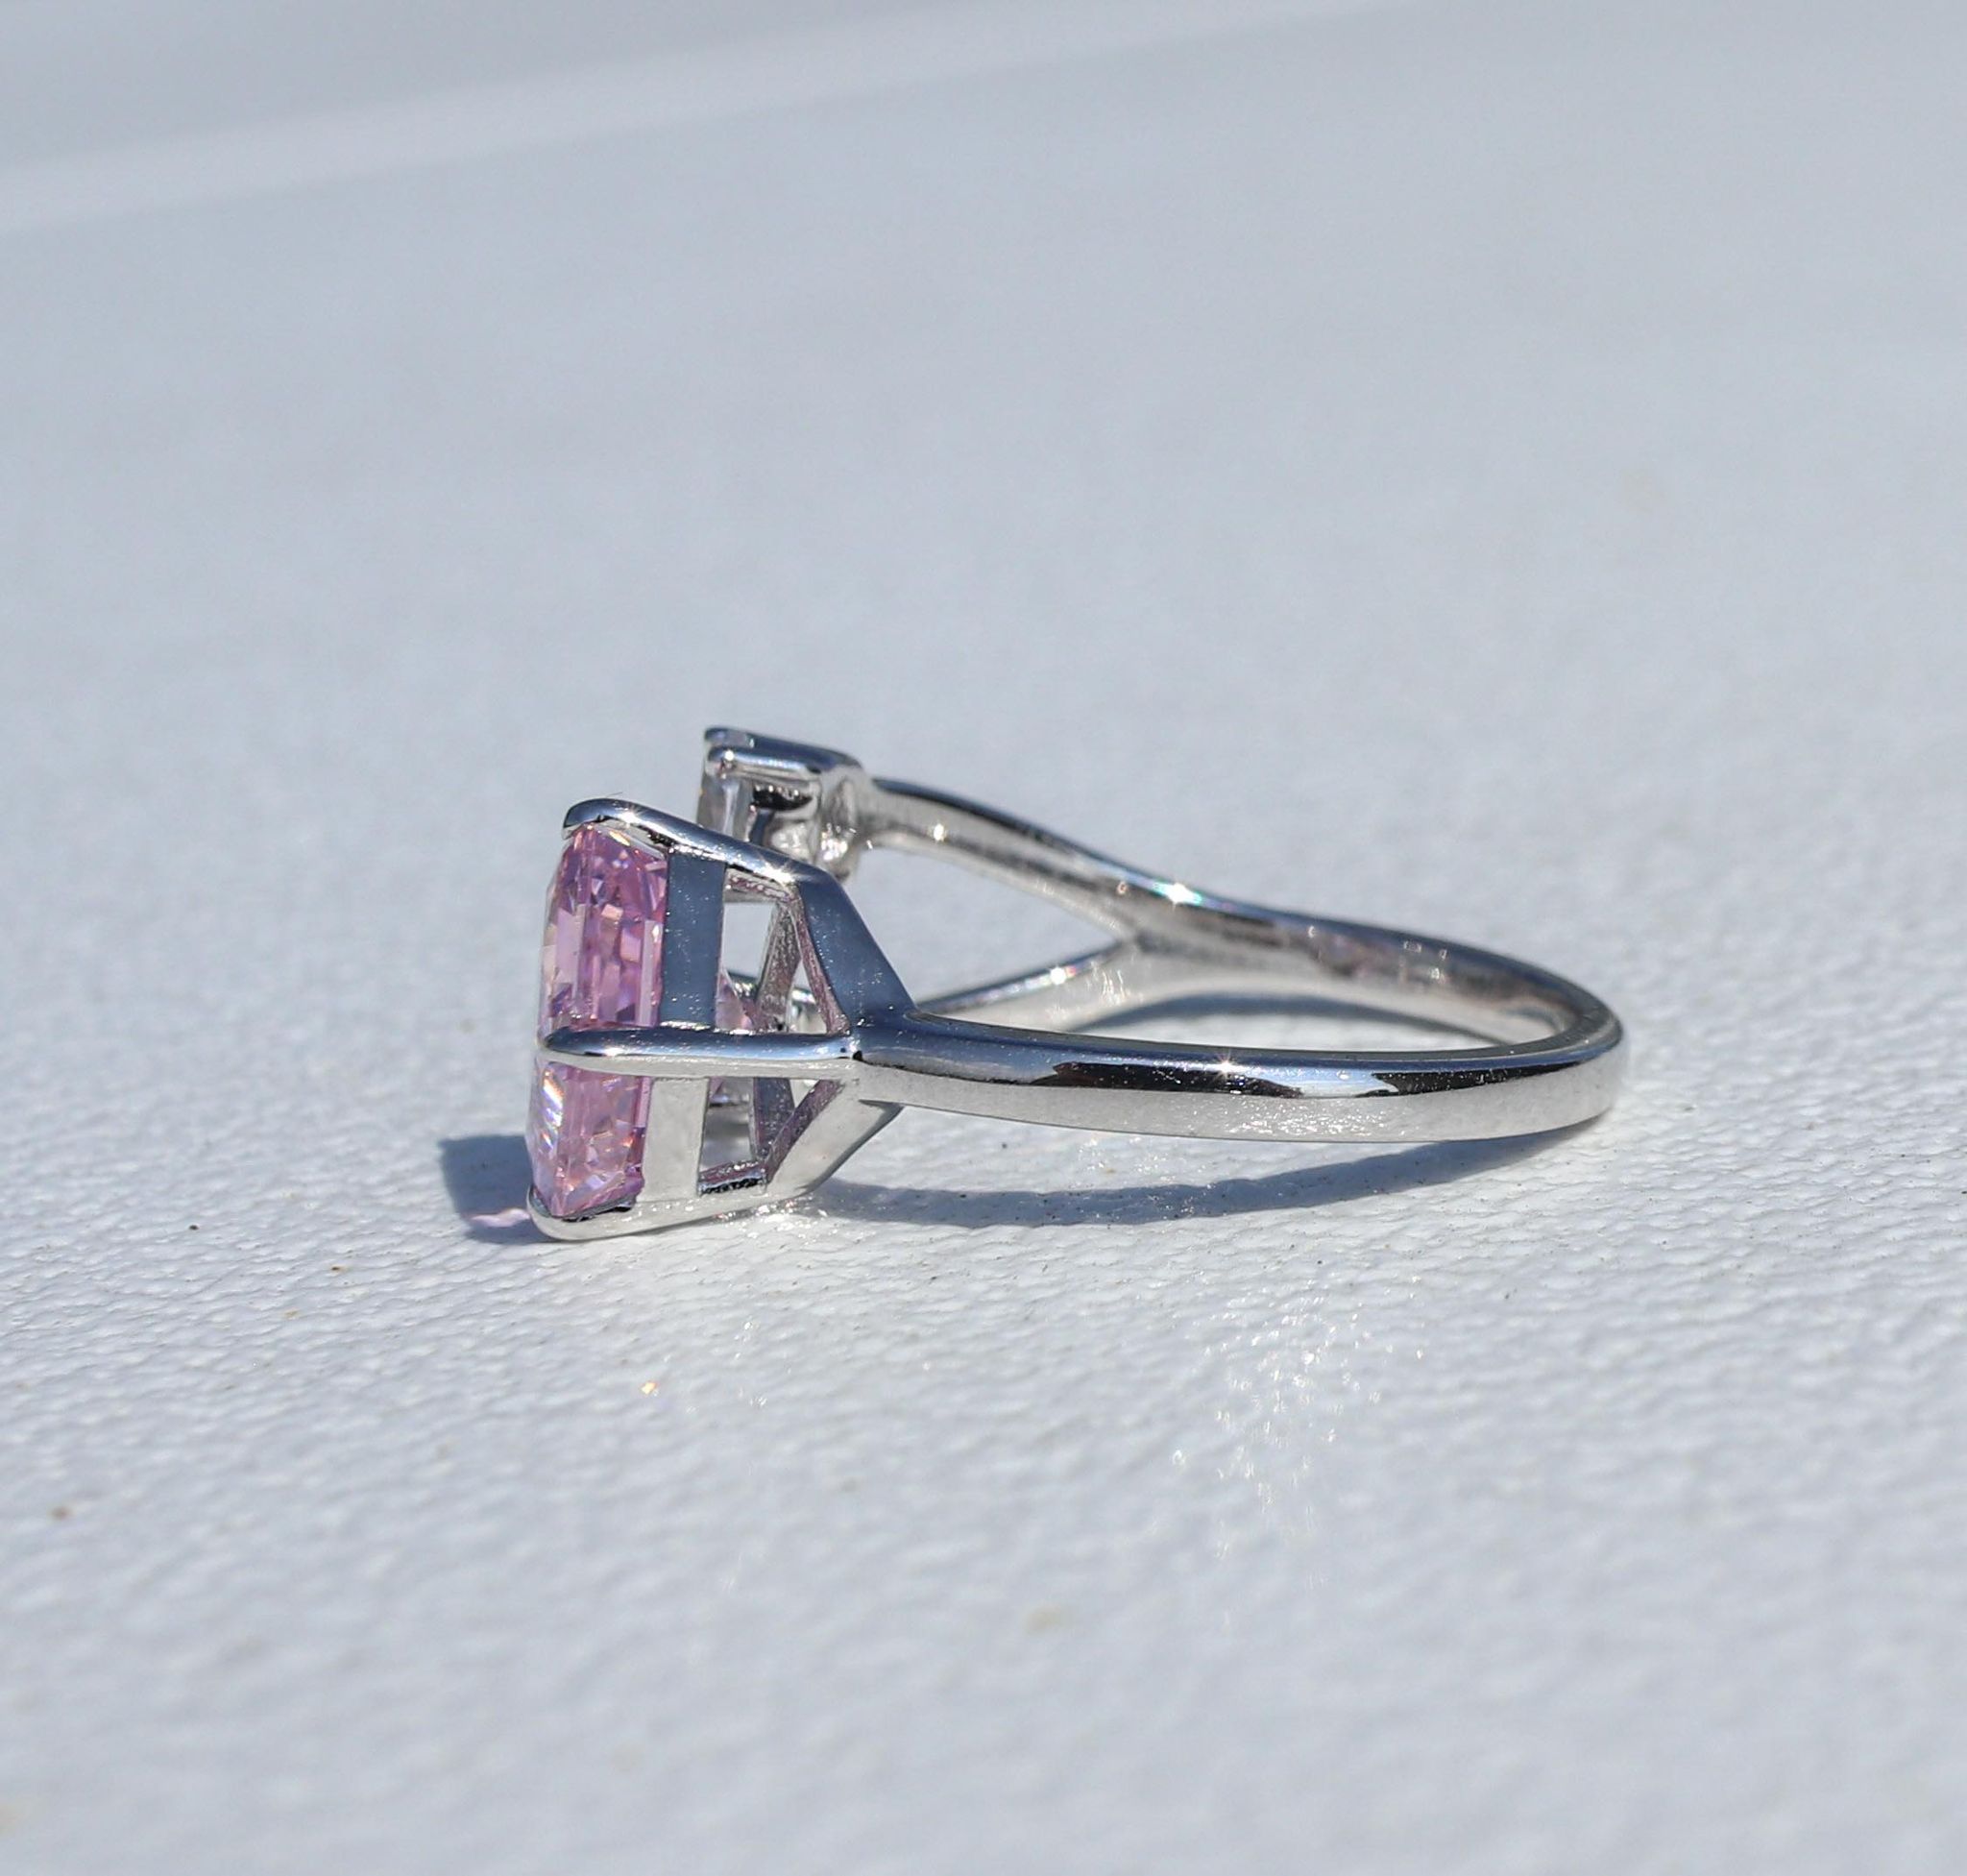 Adjustable Radiant Cut and Oval Cut Diamond Simulant Ring